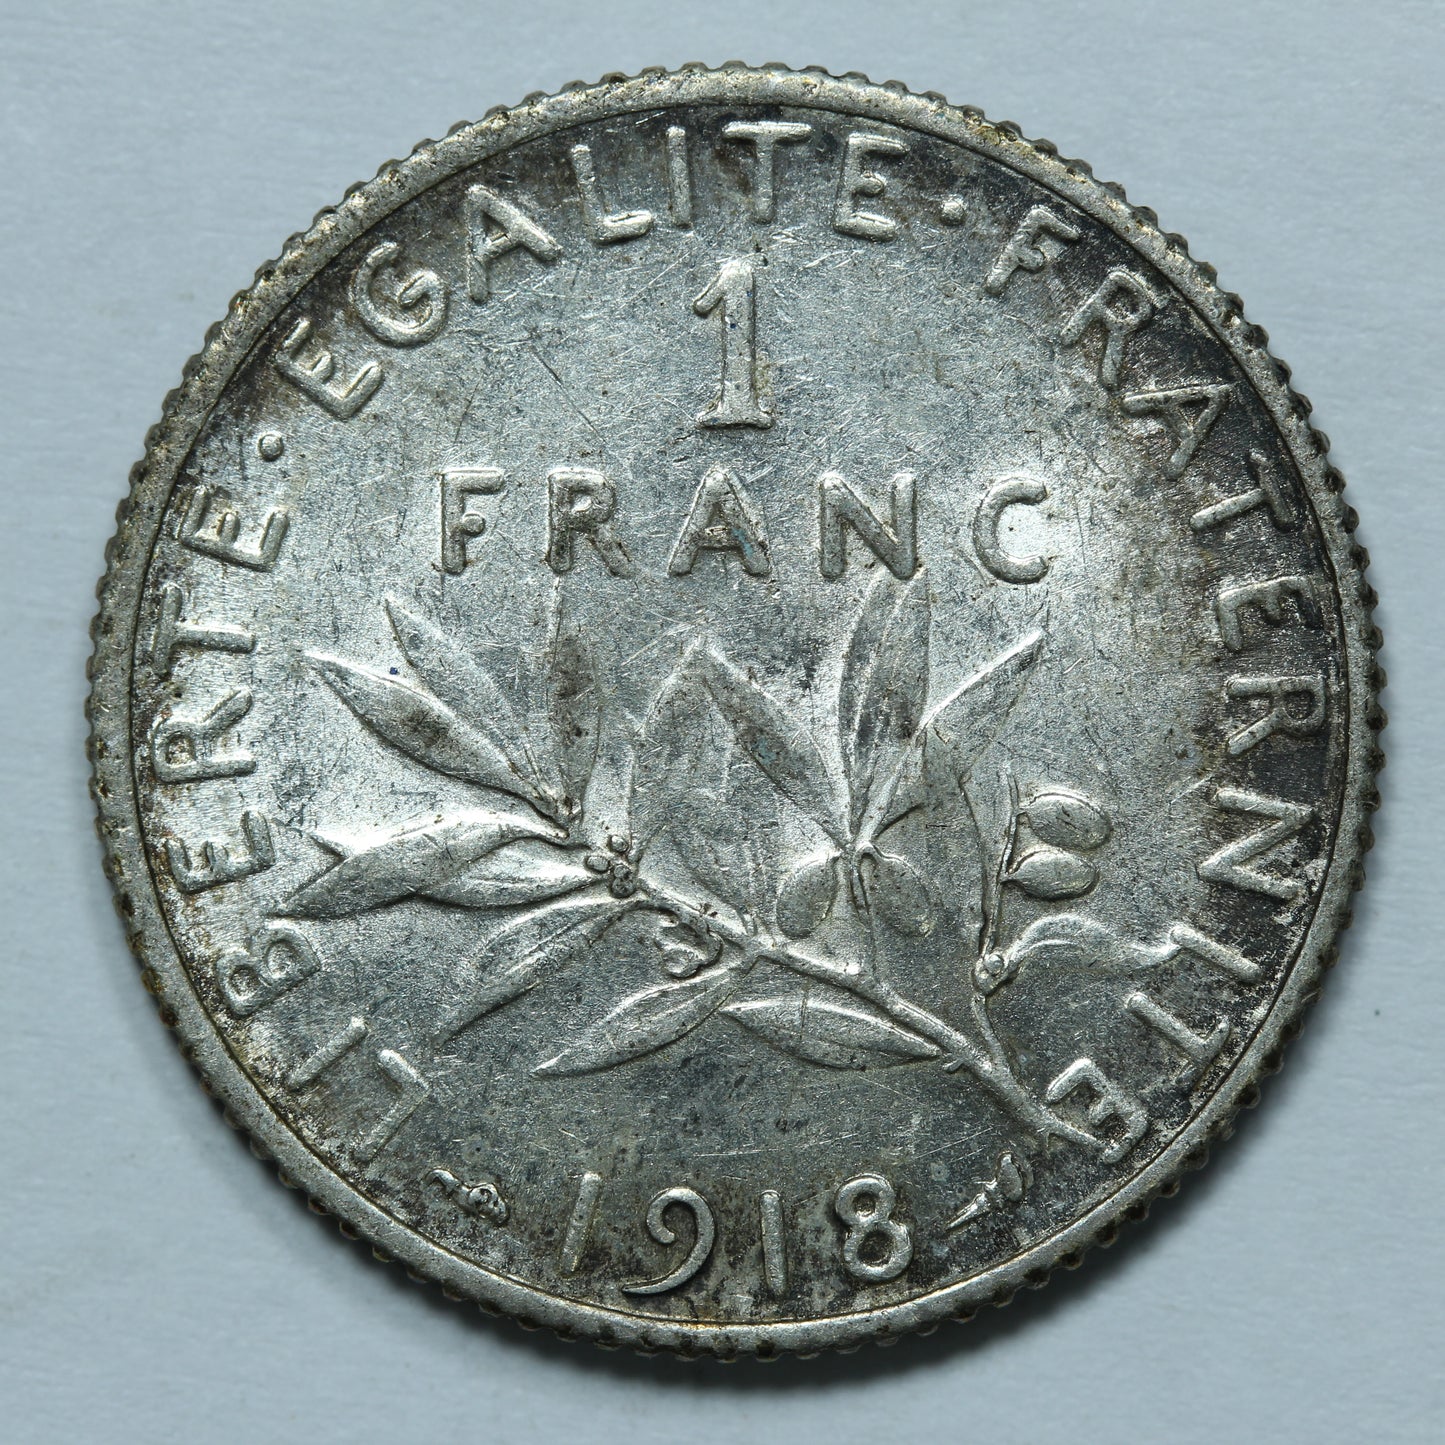 1918 1 Franc France Semeuse Silver Coin - KM# 844.1